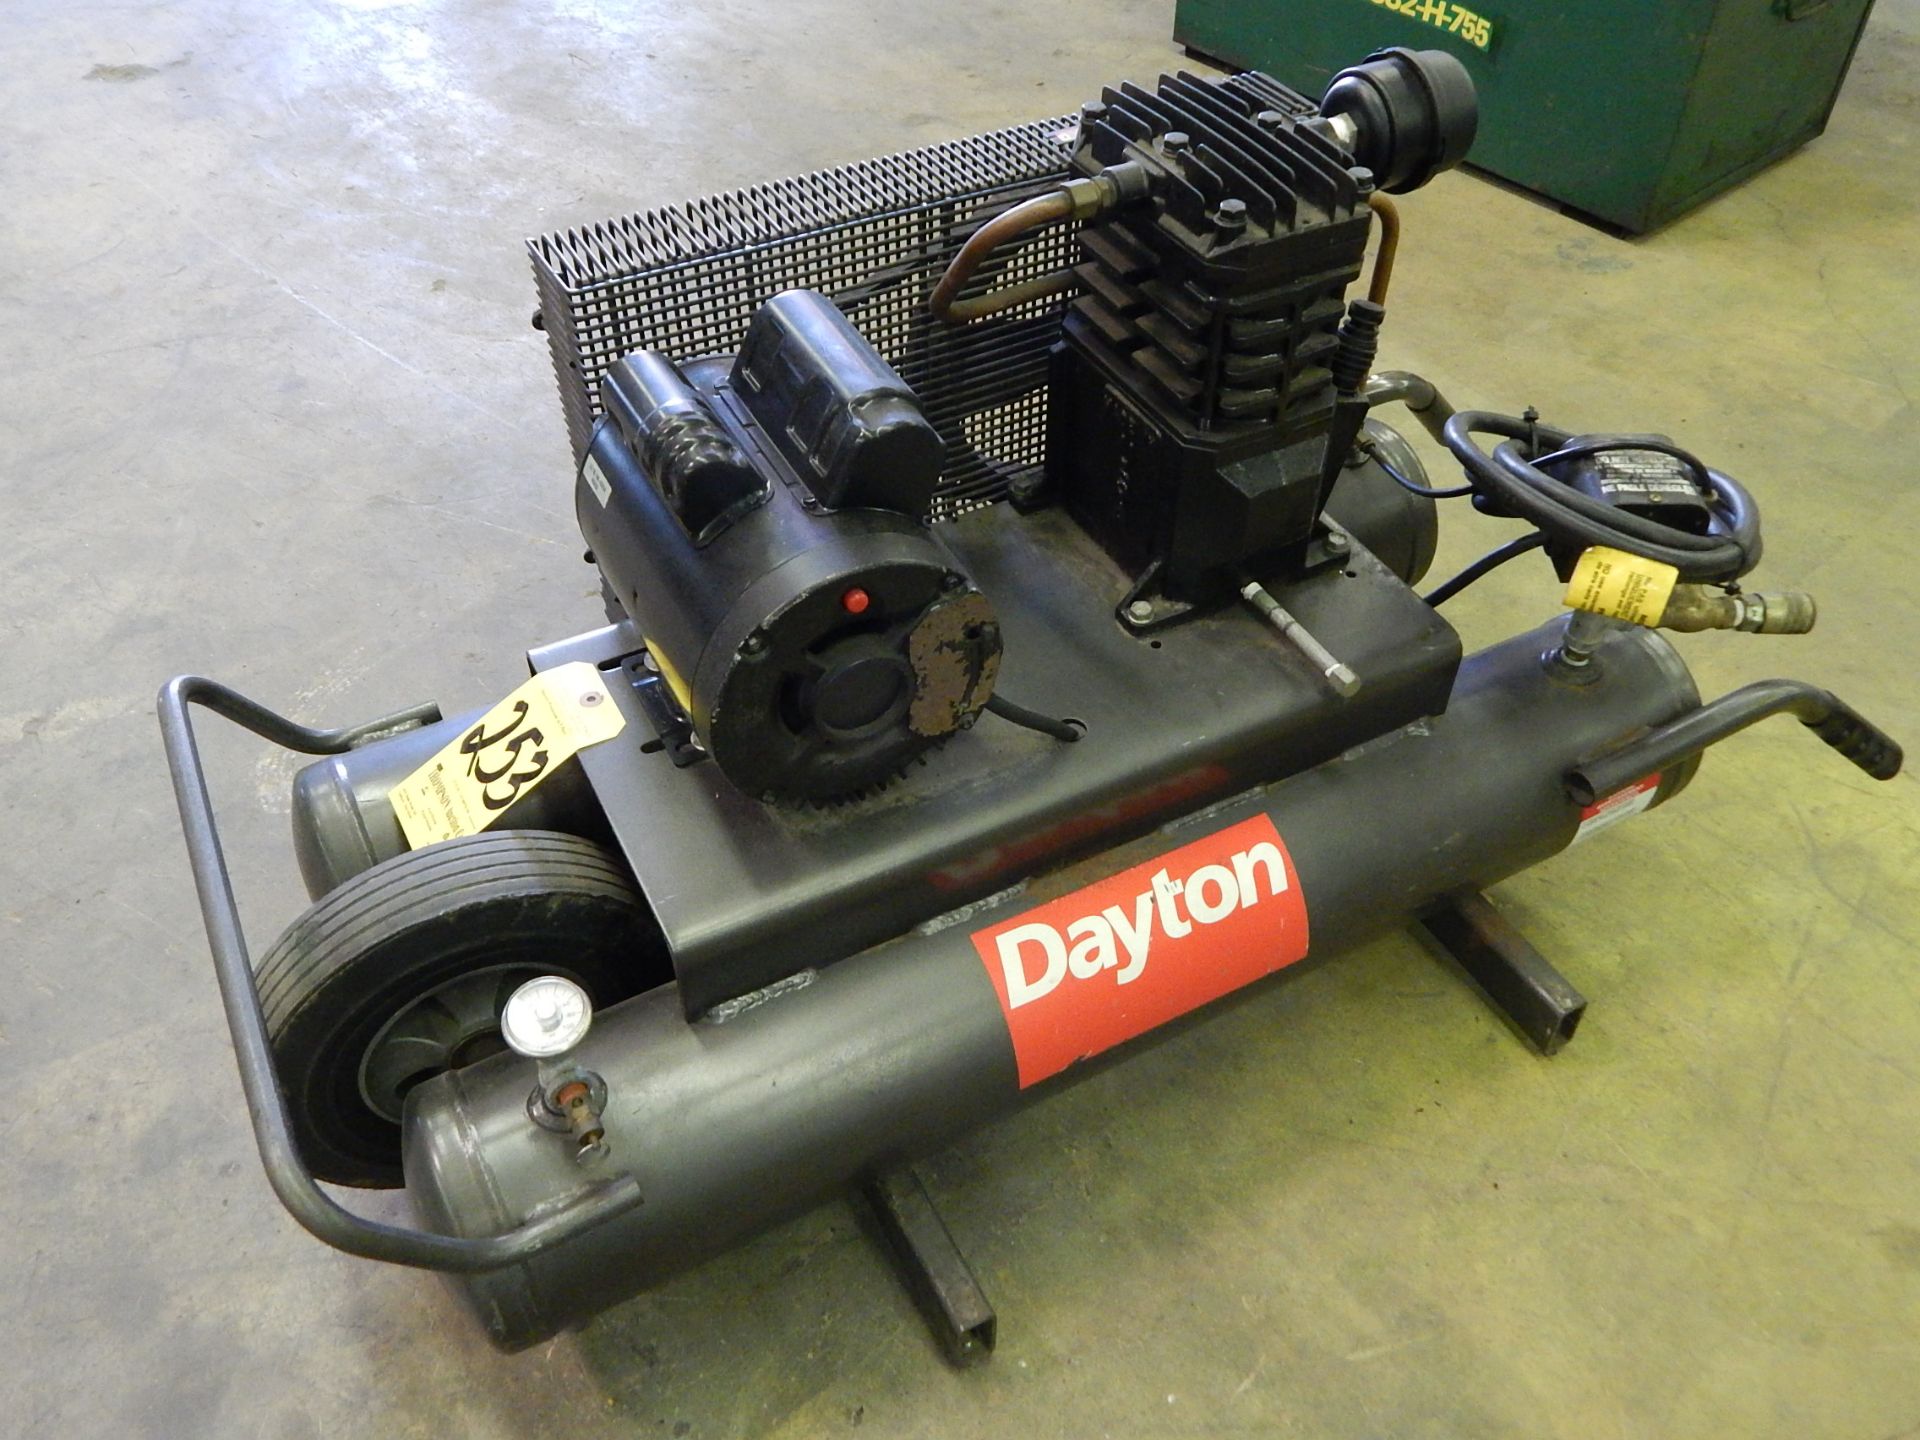 Dayton Portable Air Compressor, 115V, 1phs